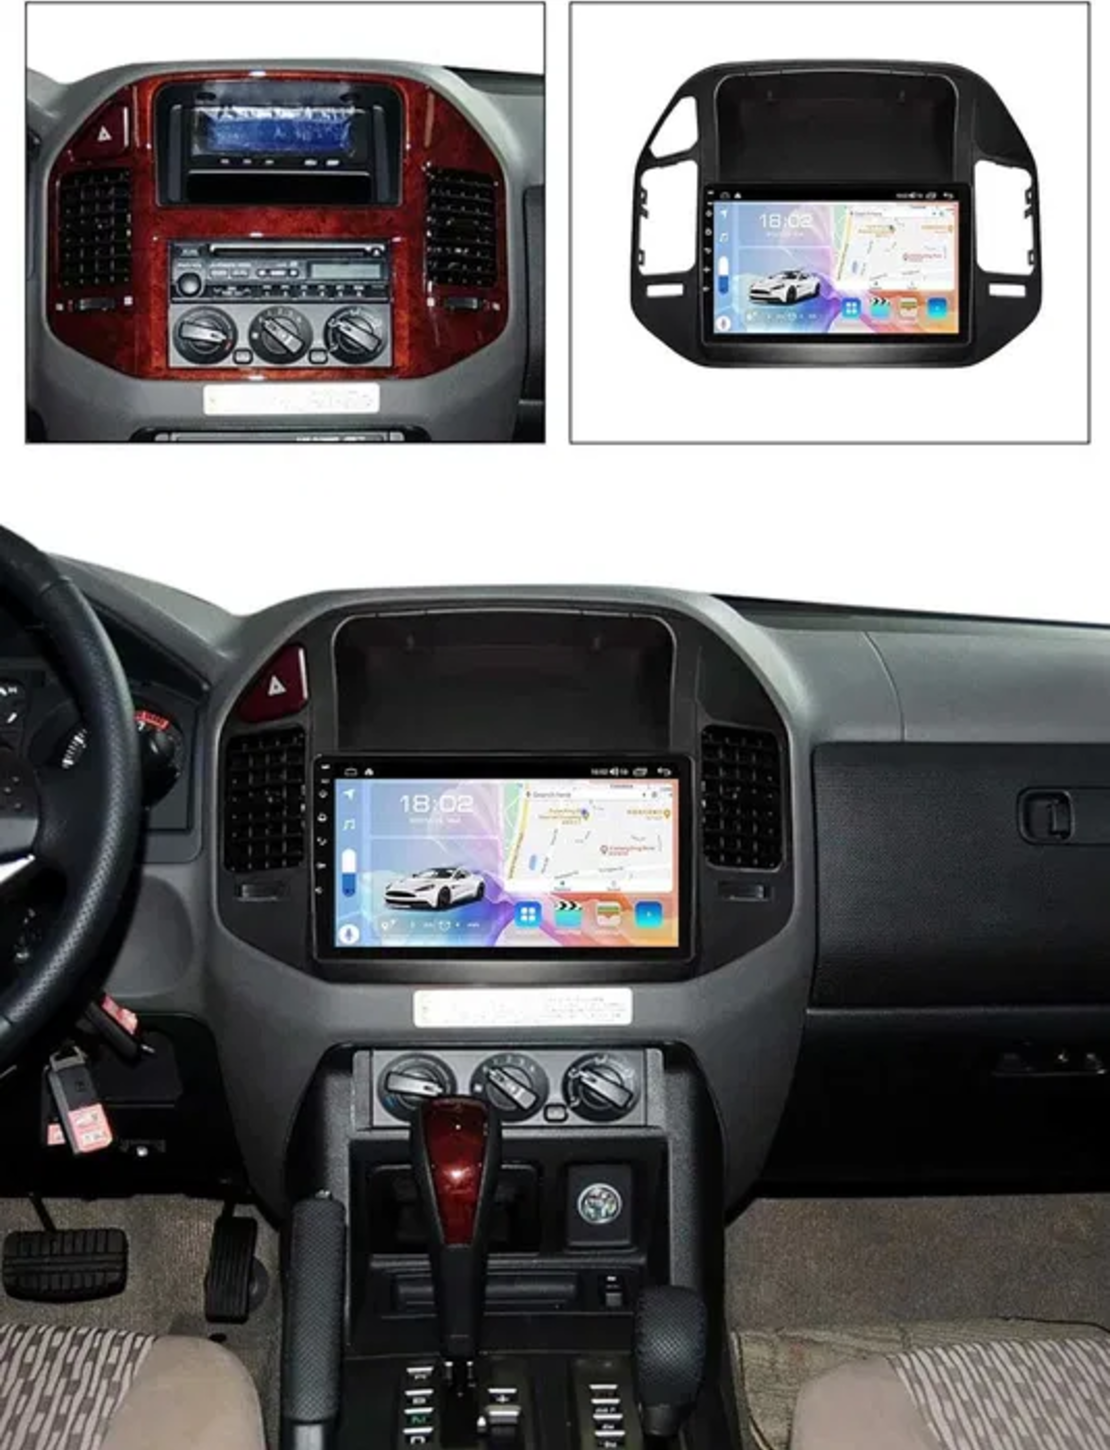 Mitsubishi Pajero V73 2004- 2011, Android Multimedia/Navigation